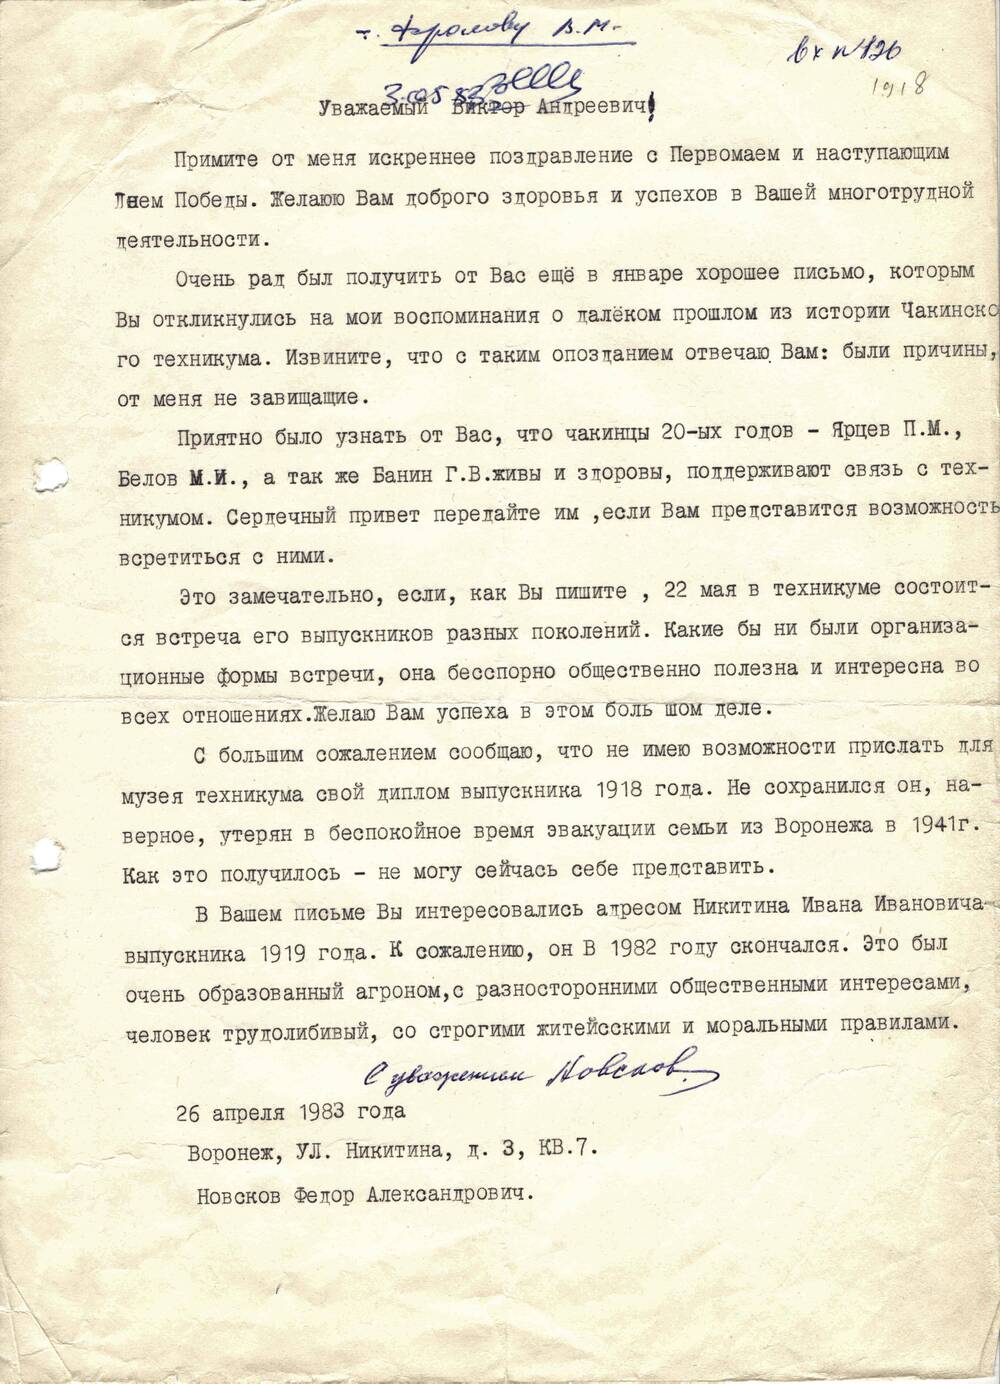 Письмо от Новского Ф.А. от 26.04.1983 г.